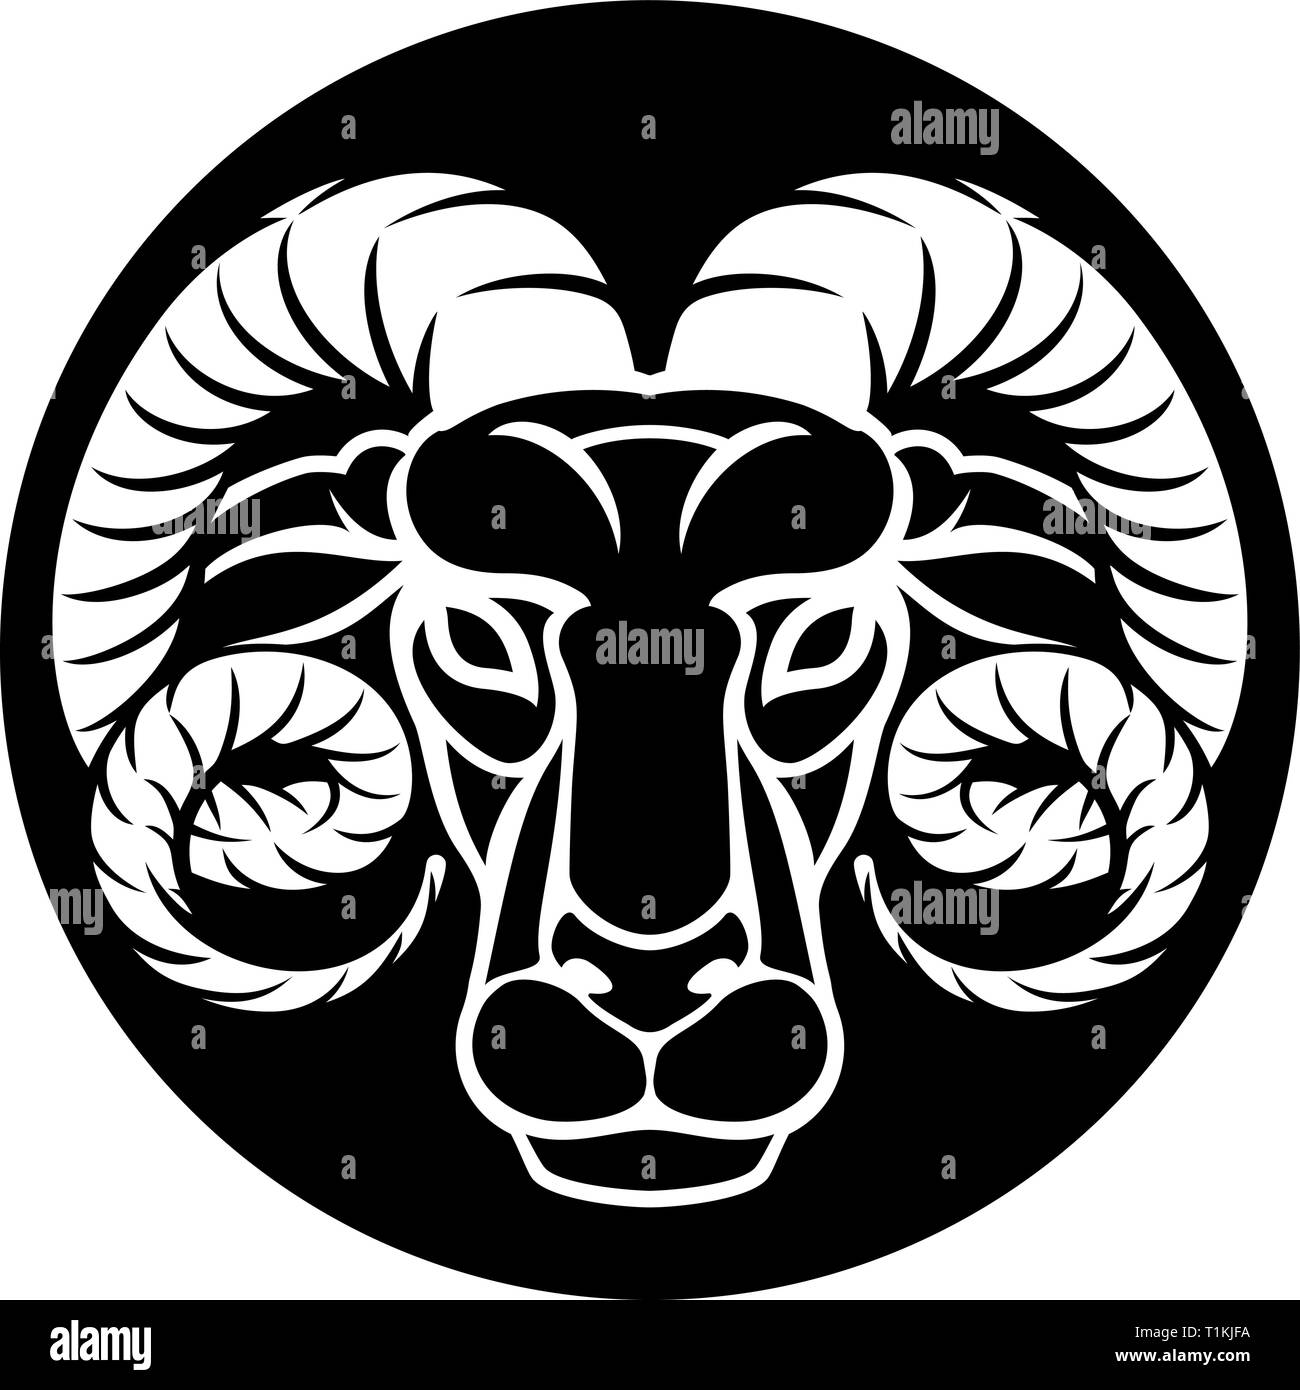 Ram Aries Zodiac Horoscope Sign Stock Vector